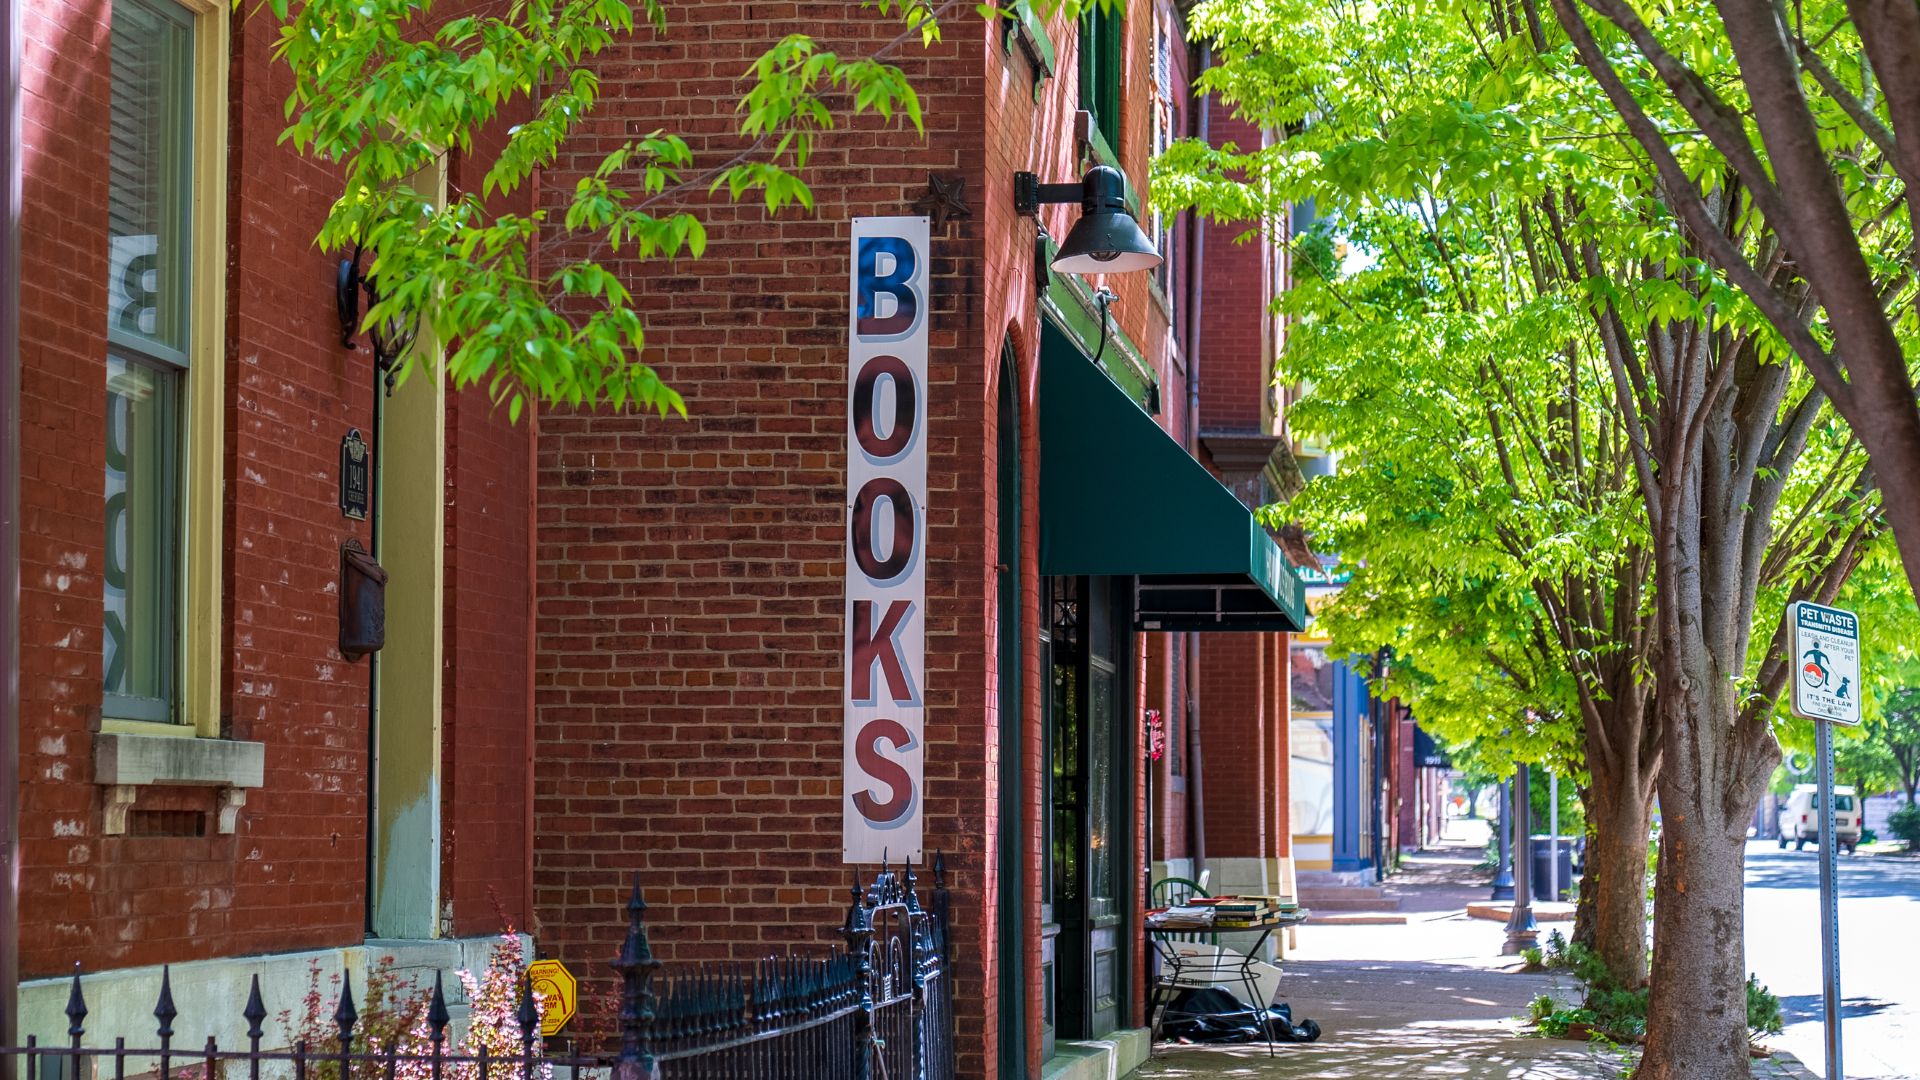 Hammonds Books is located on Cherokee Antique Row.